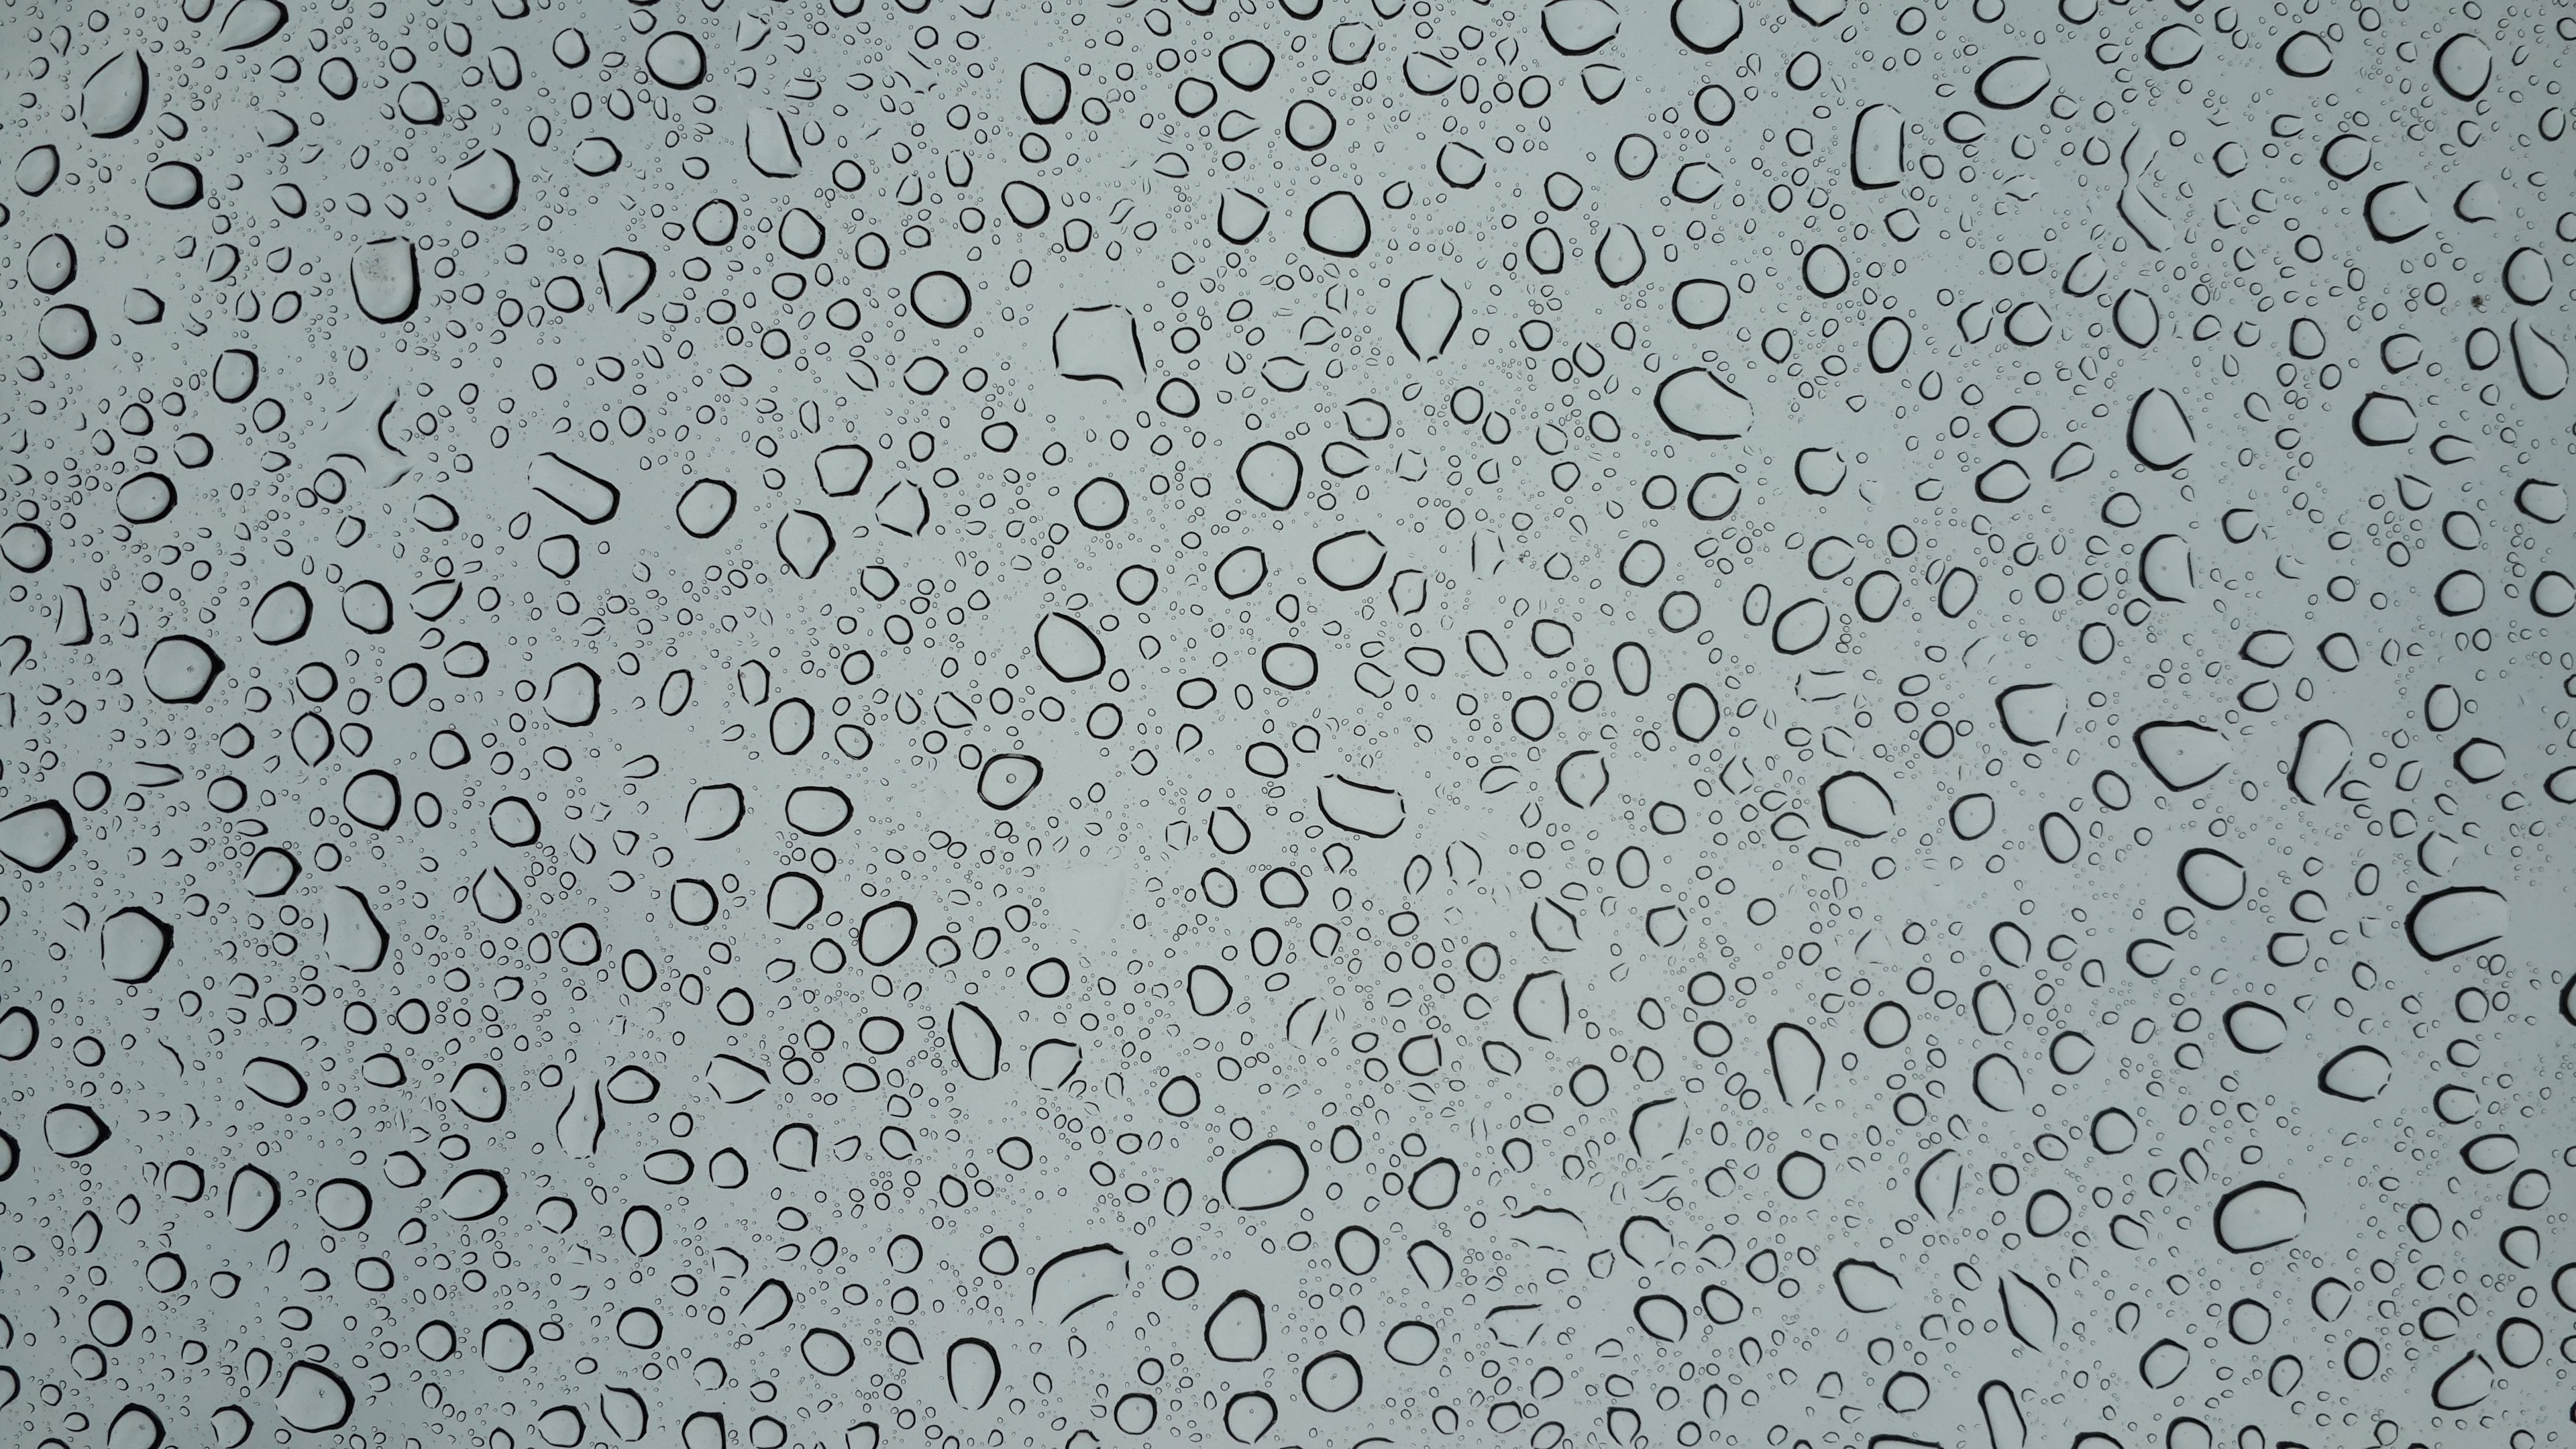 HD wallpaper: IOS 5 Wallpaper - Water Drops HD Wallpaper, water droplets,  Elements | Wallpaper Flare